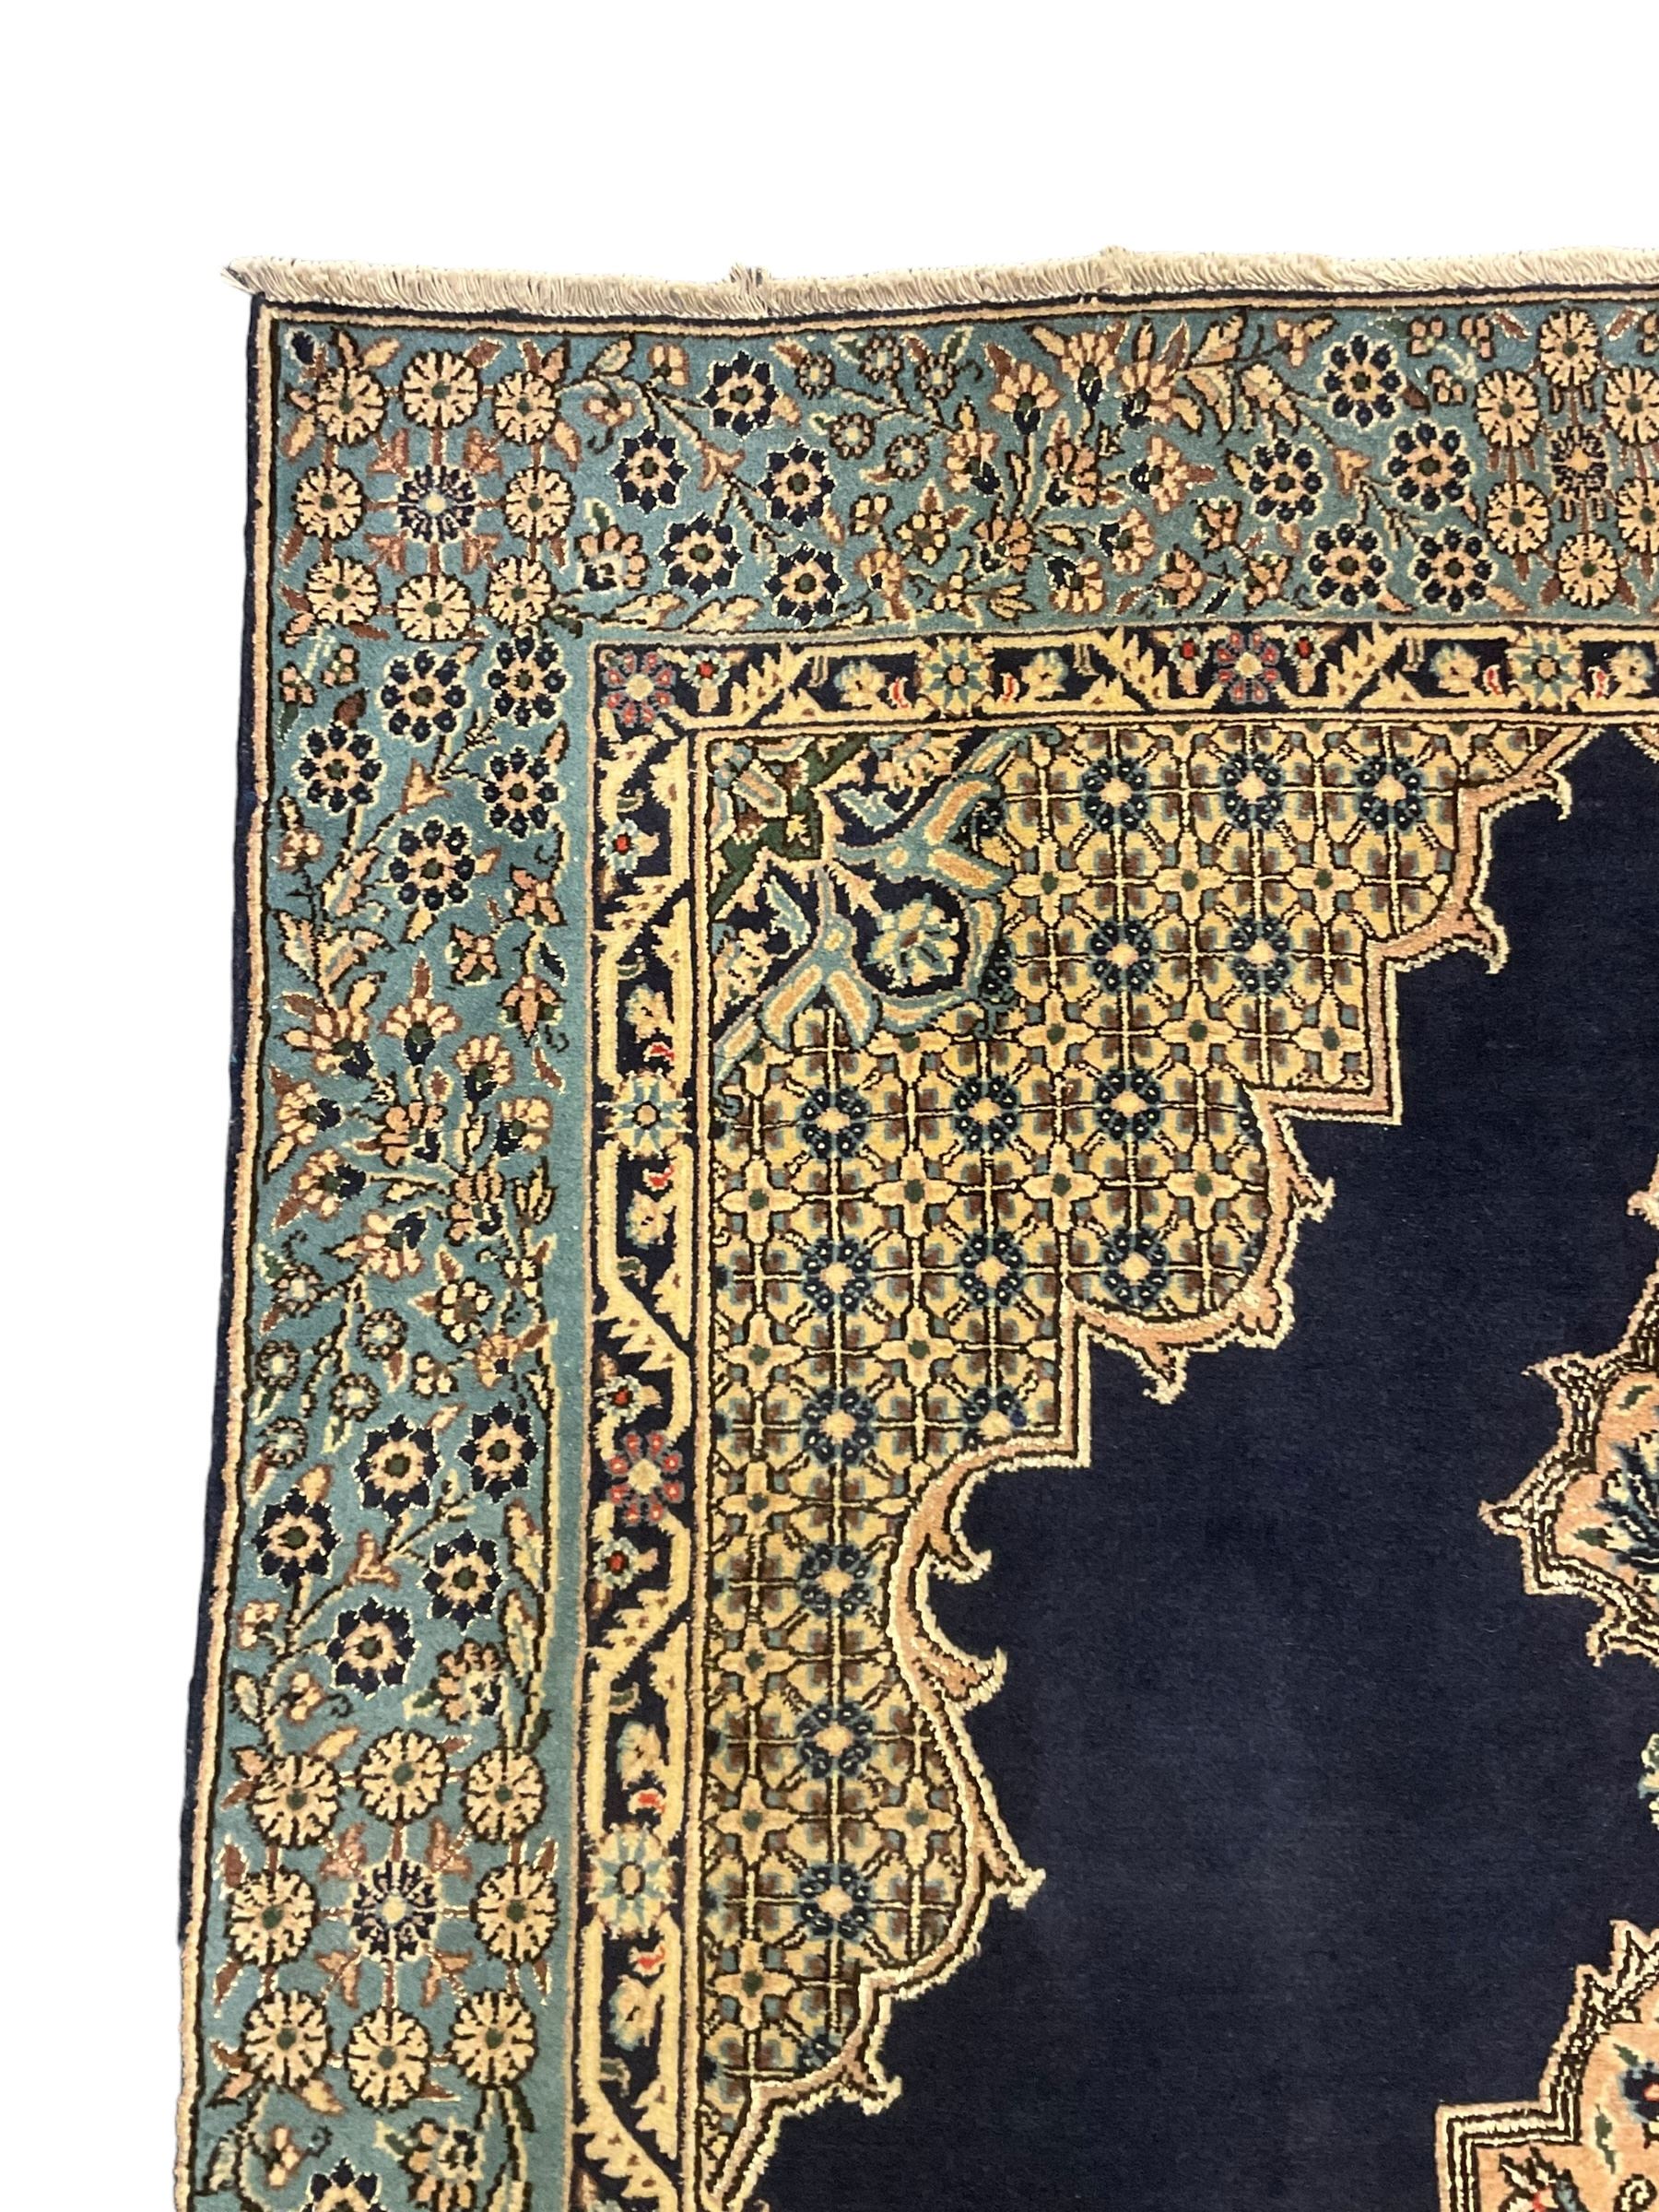 Central Persian Qum indigo ground rug with silk inlay - Image 3 of 5